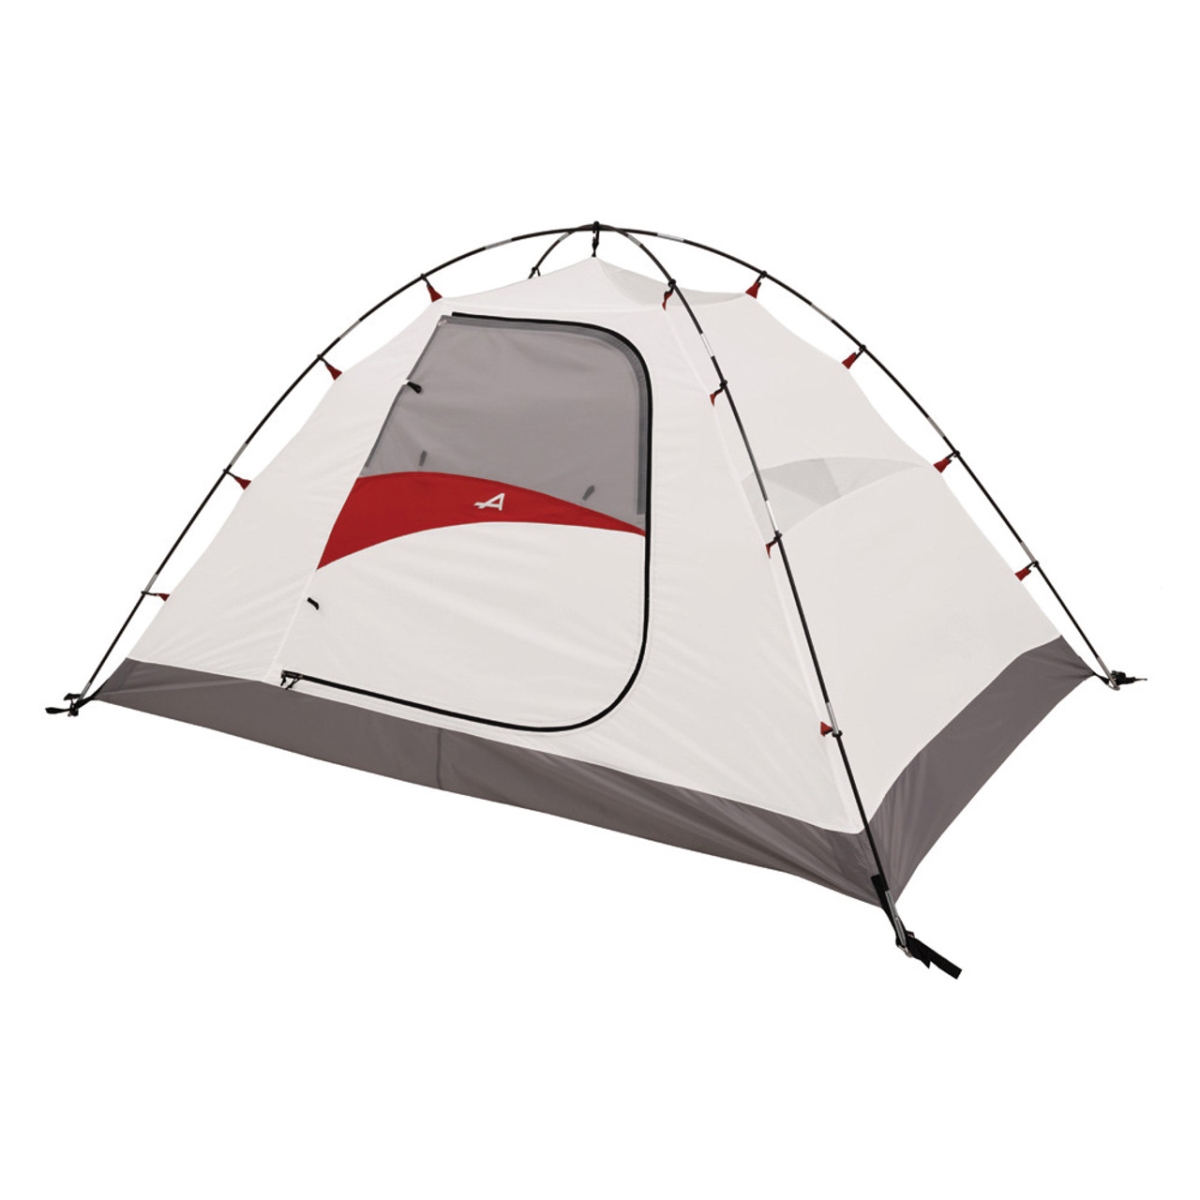 ALPS Mountaineering 495233 Taurus Tents - 2 Person